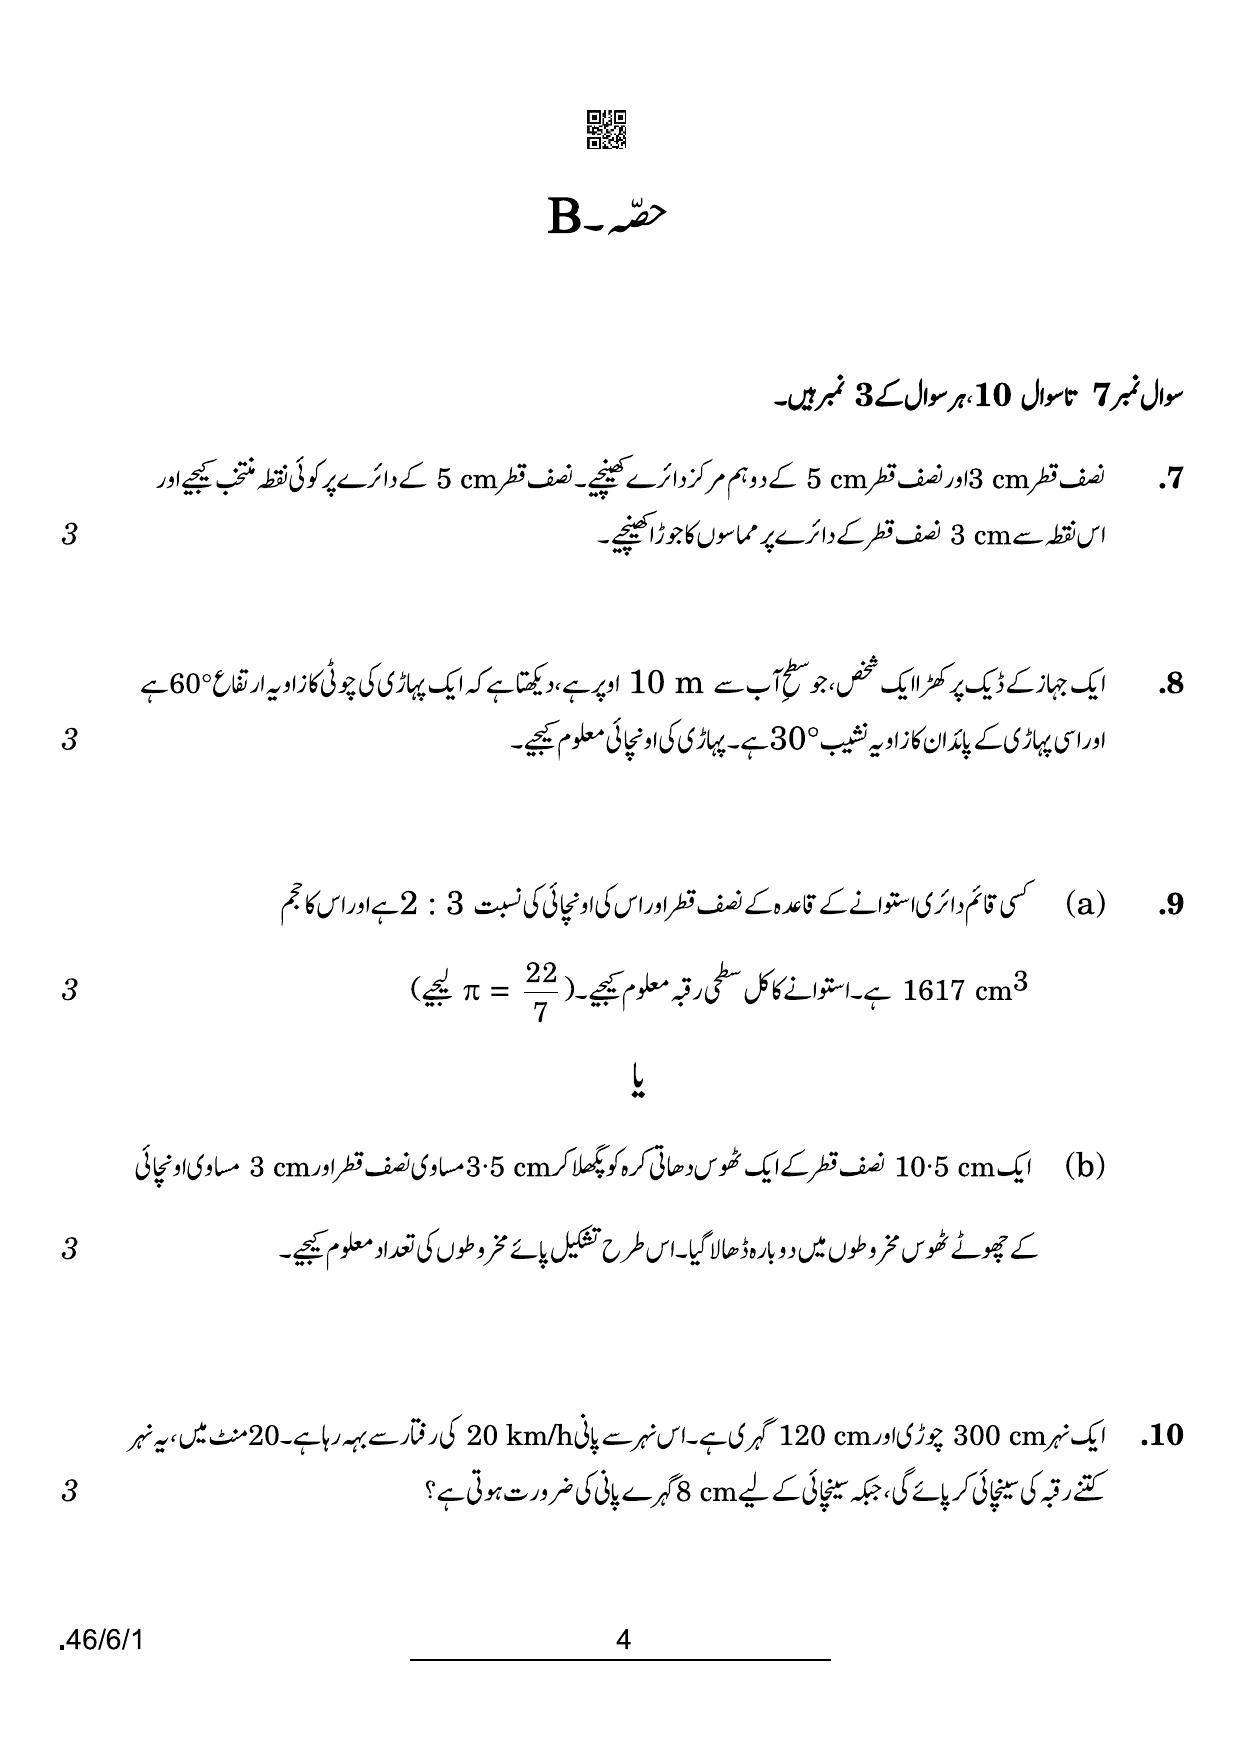 CBSE Class 10 46-6-1 Maths Standard Urdu 2022 Compartment Question Paper - Page 4